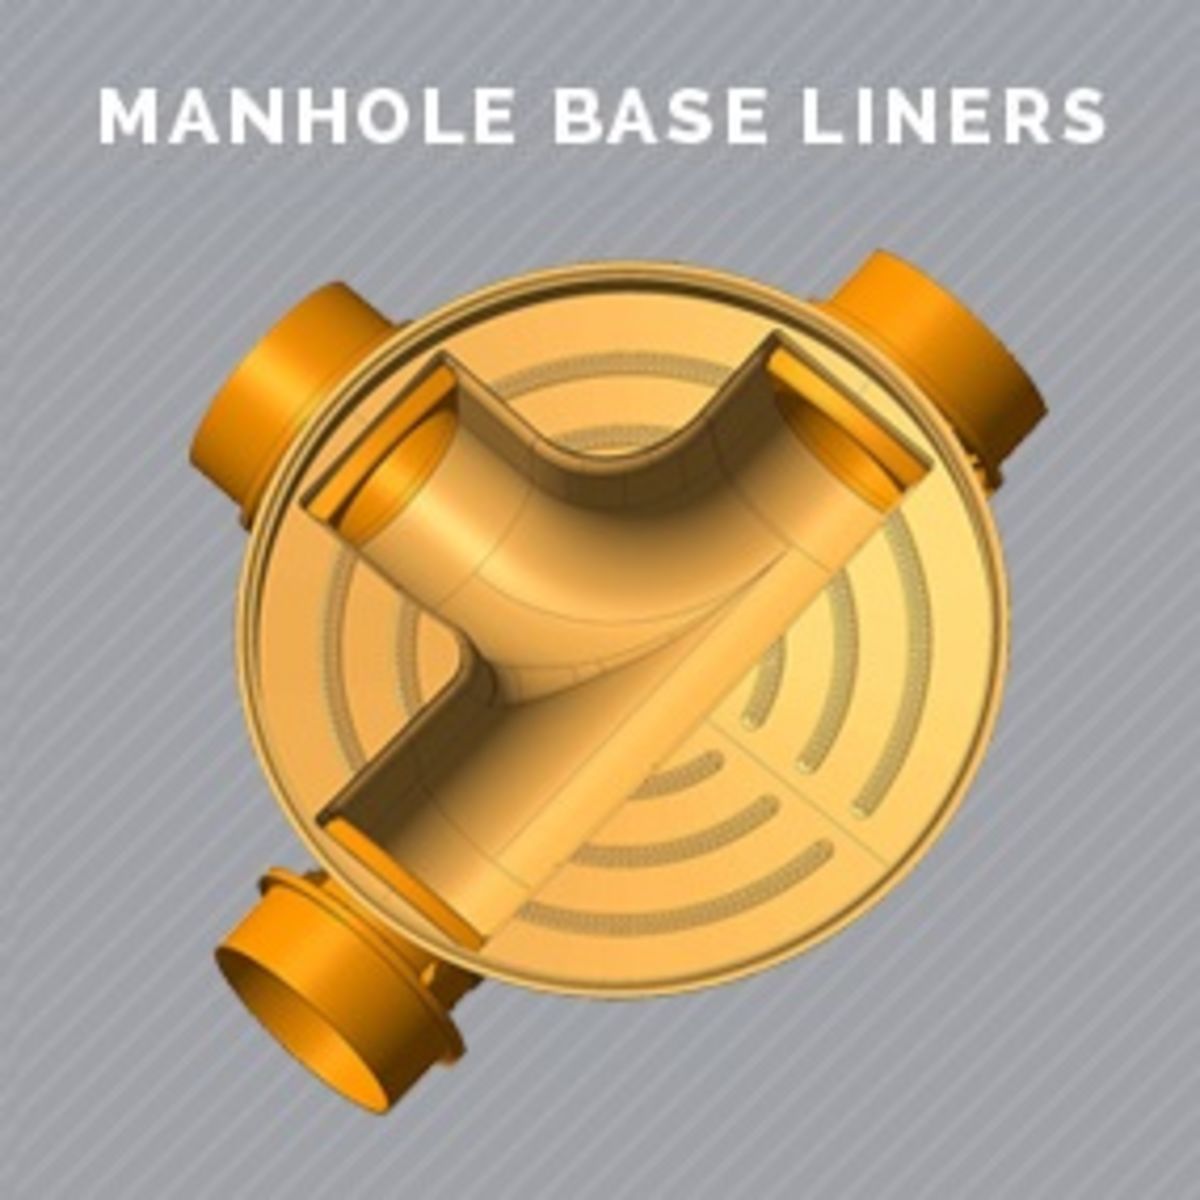 drawings manhole baseliners